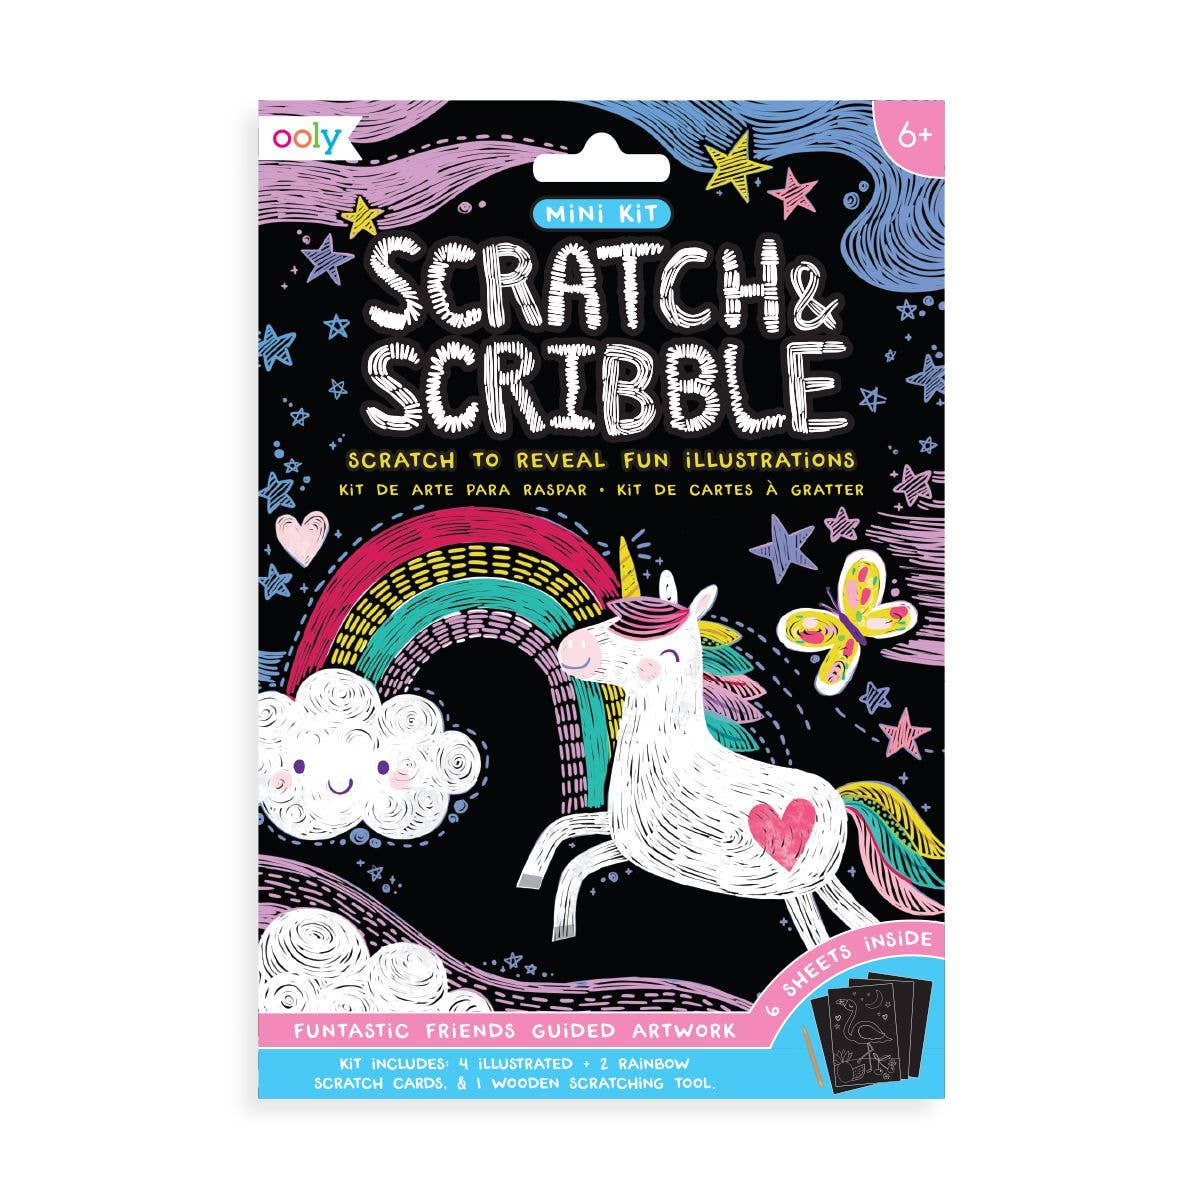 Scratch & Scribble Art Kit from Favorite Little Things